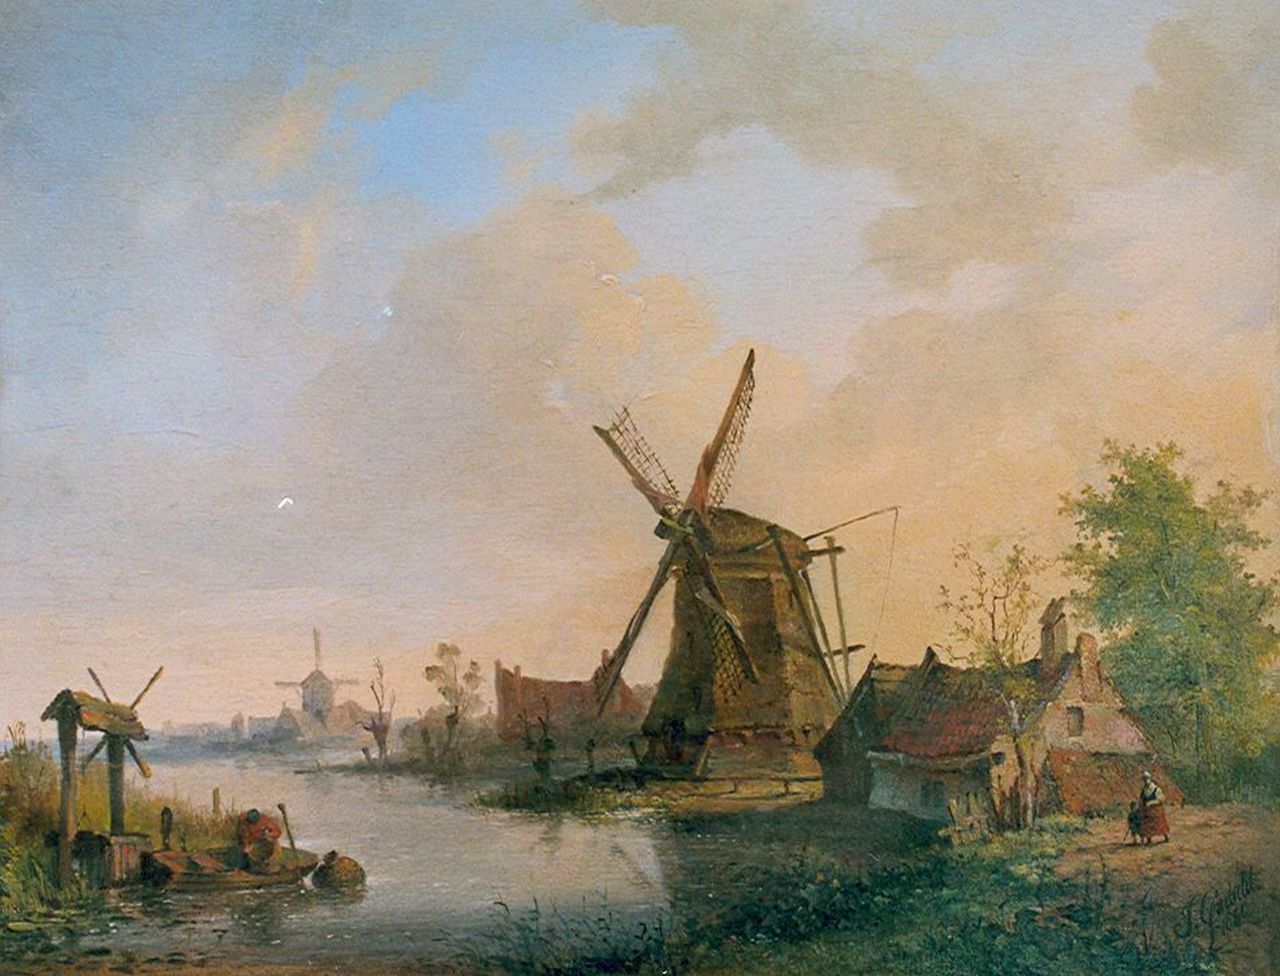 Grootveld J.D.G.  | Jan David Geerling Grootveld, Windmills along a waterway, oil on panel 20.4 x 26.2 cm, signed l.r. and dated 1840